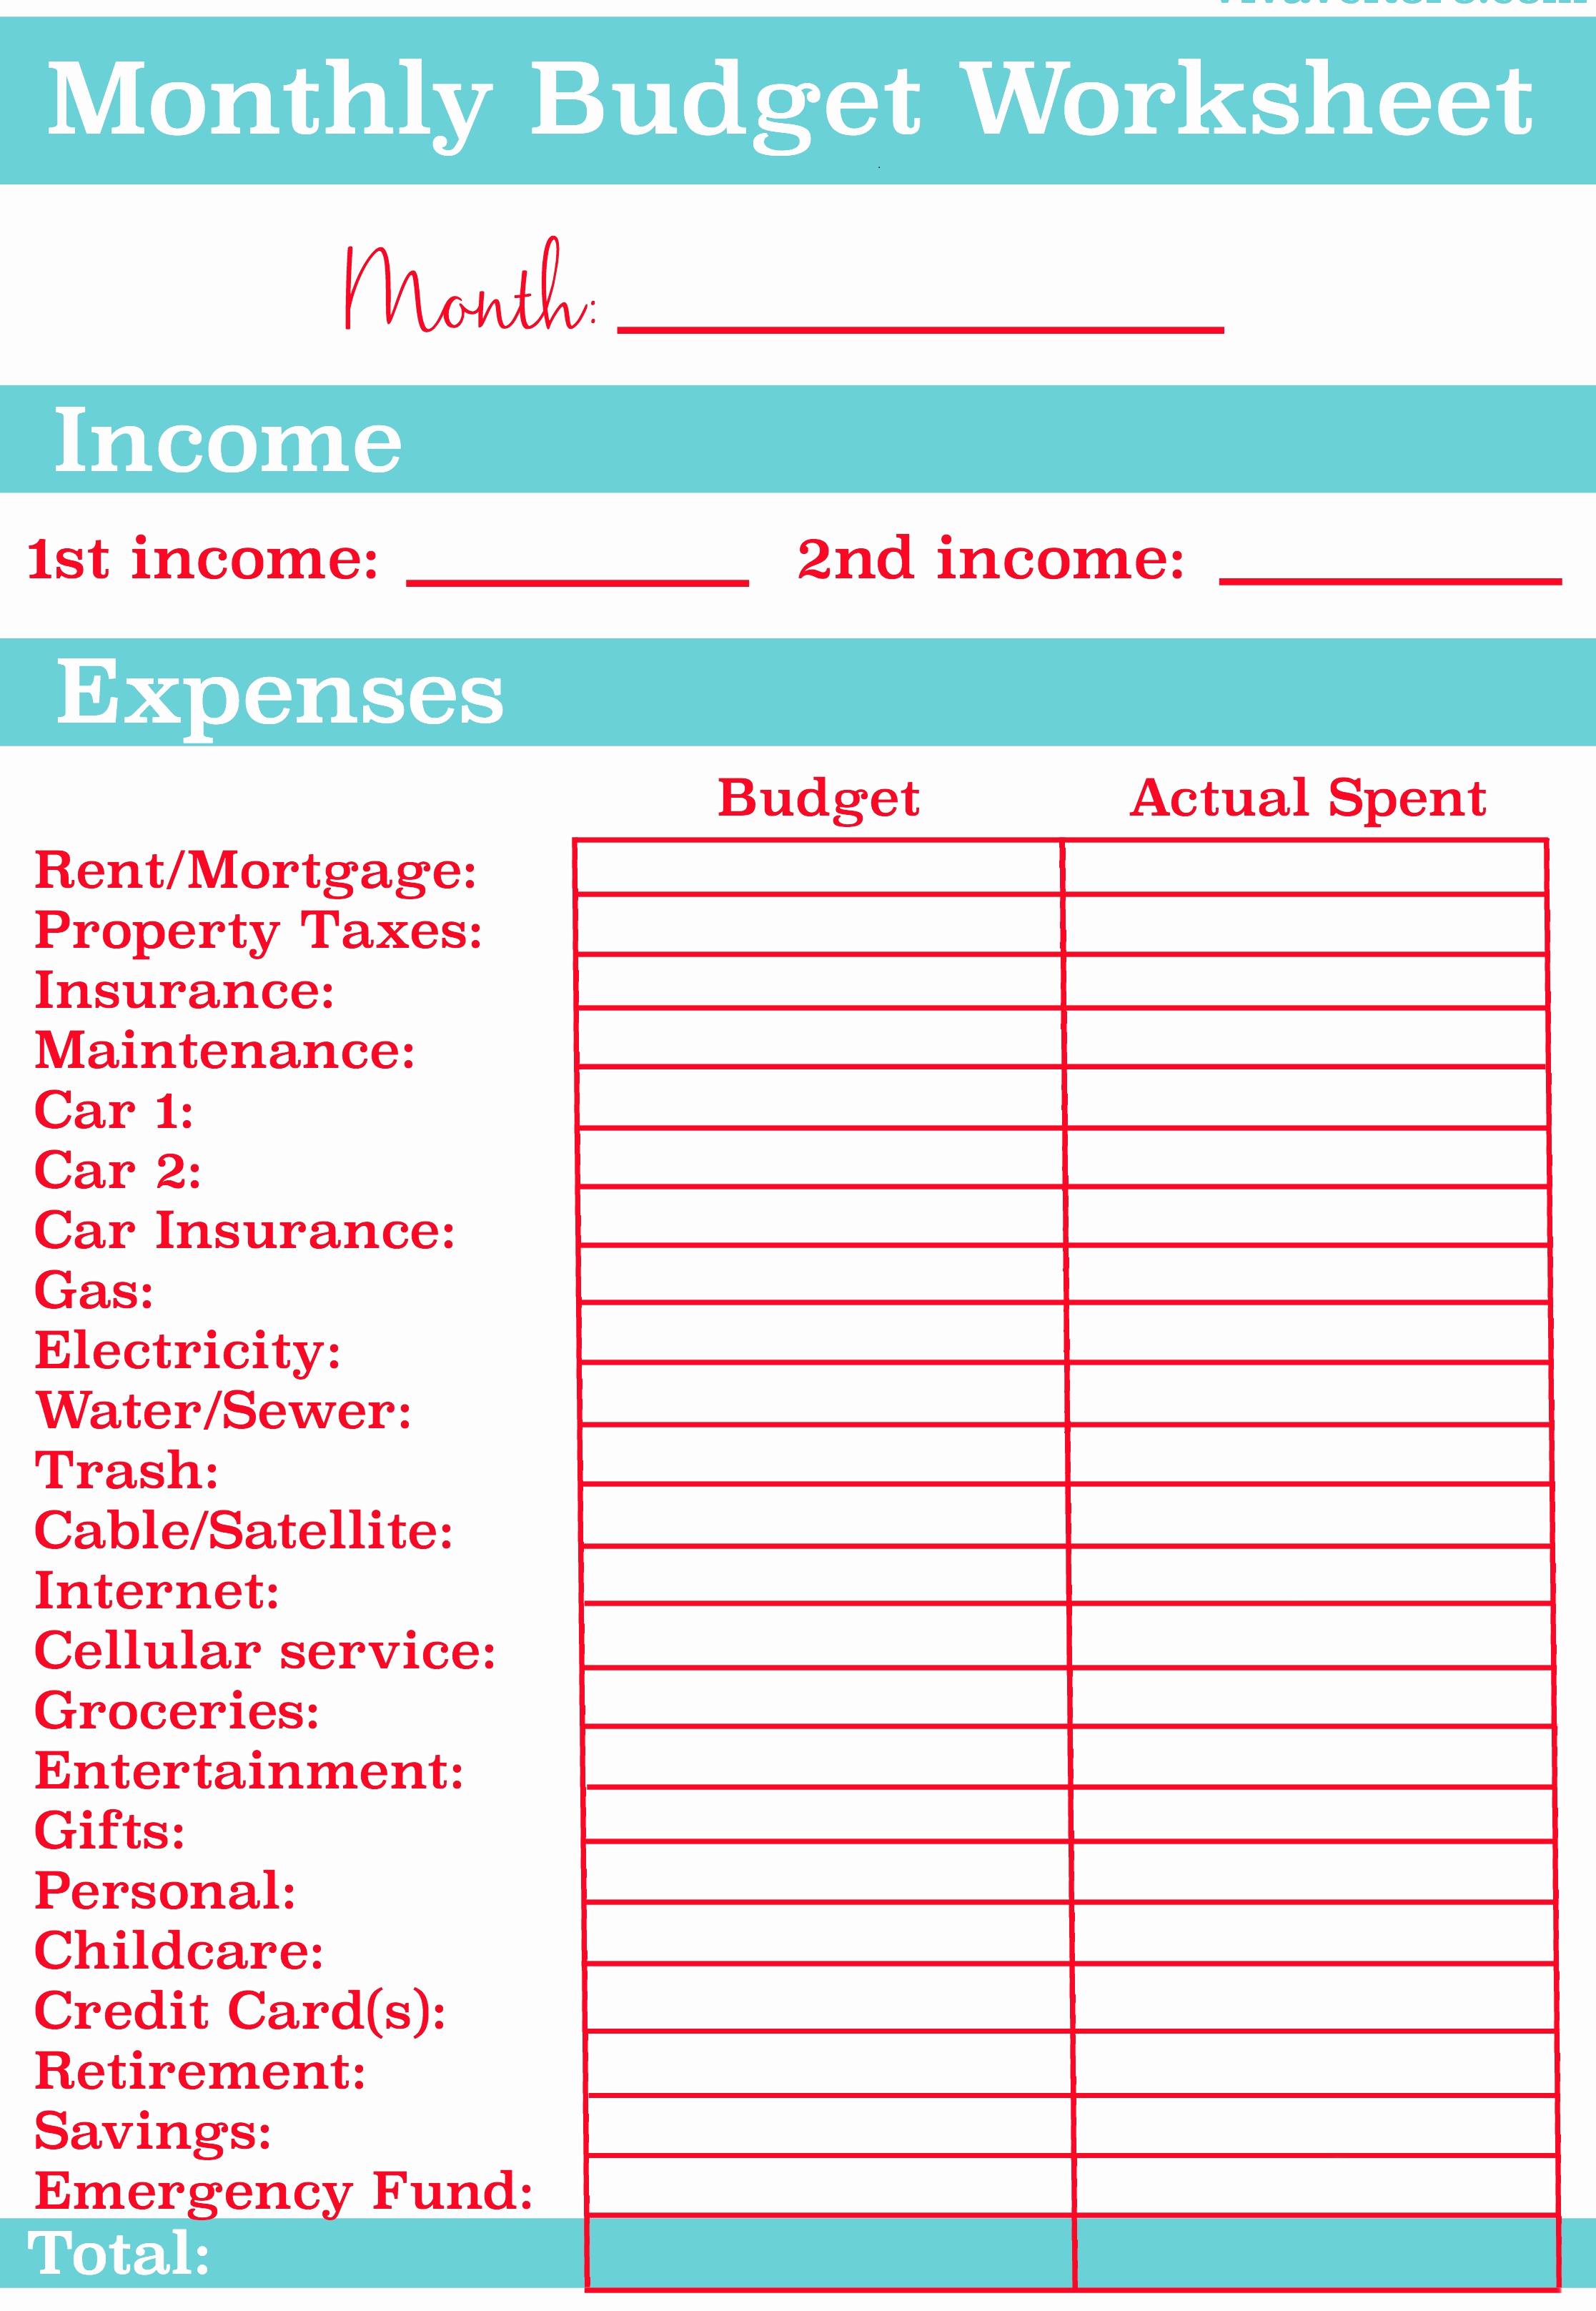 Monthly Budget Spreadsheet Dave Ramsey Inspirational Dave Ramsey Bud intended for Monthly Budget Spreadsheet